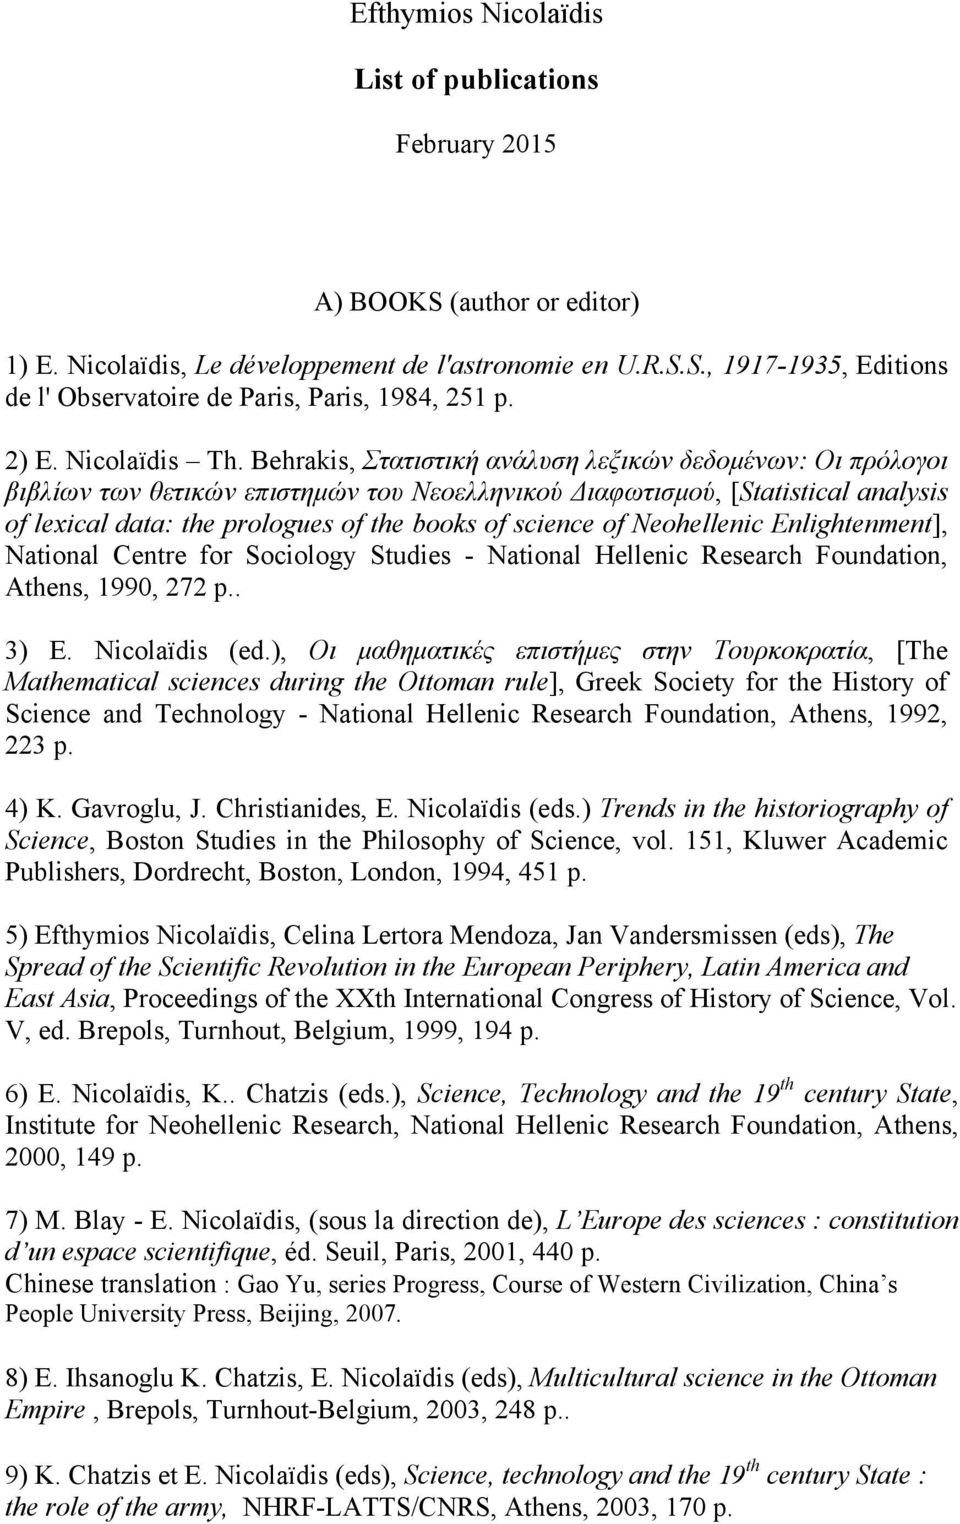 Behrakis, Στατιστική ανάλυση λεξικών δεδοµένων: Οι πρόλογοι βιβλίων των θετικών επιστηµών του Νεοελληνικού Διαφωτισµού, [Statistical analysis of lexical data: the prologues of the books of science of